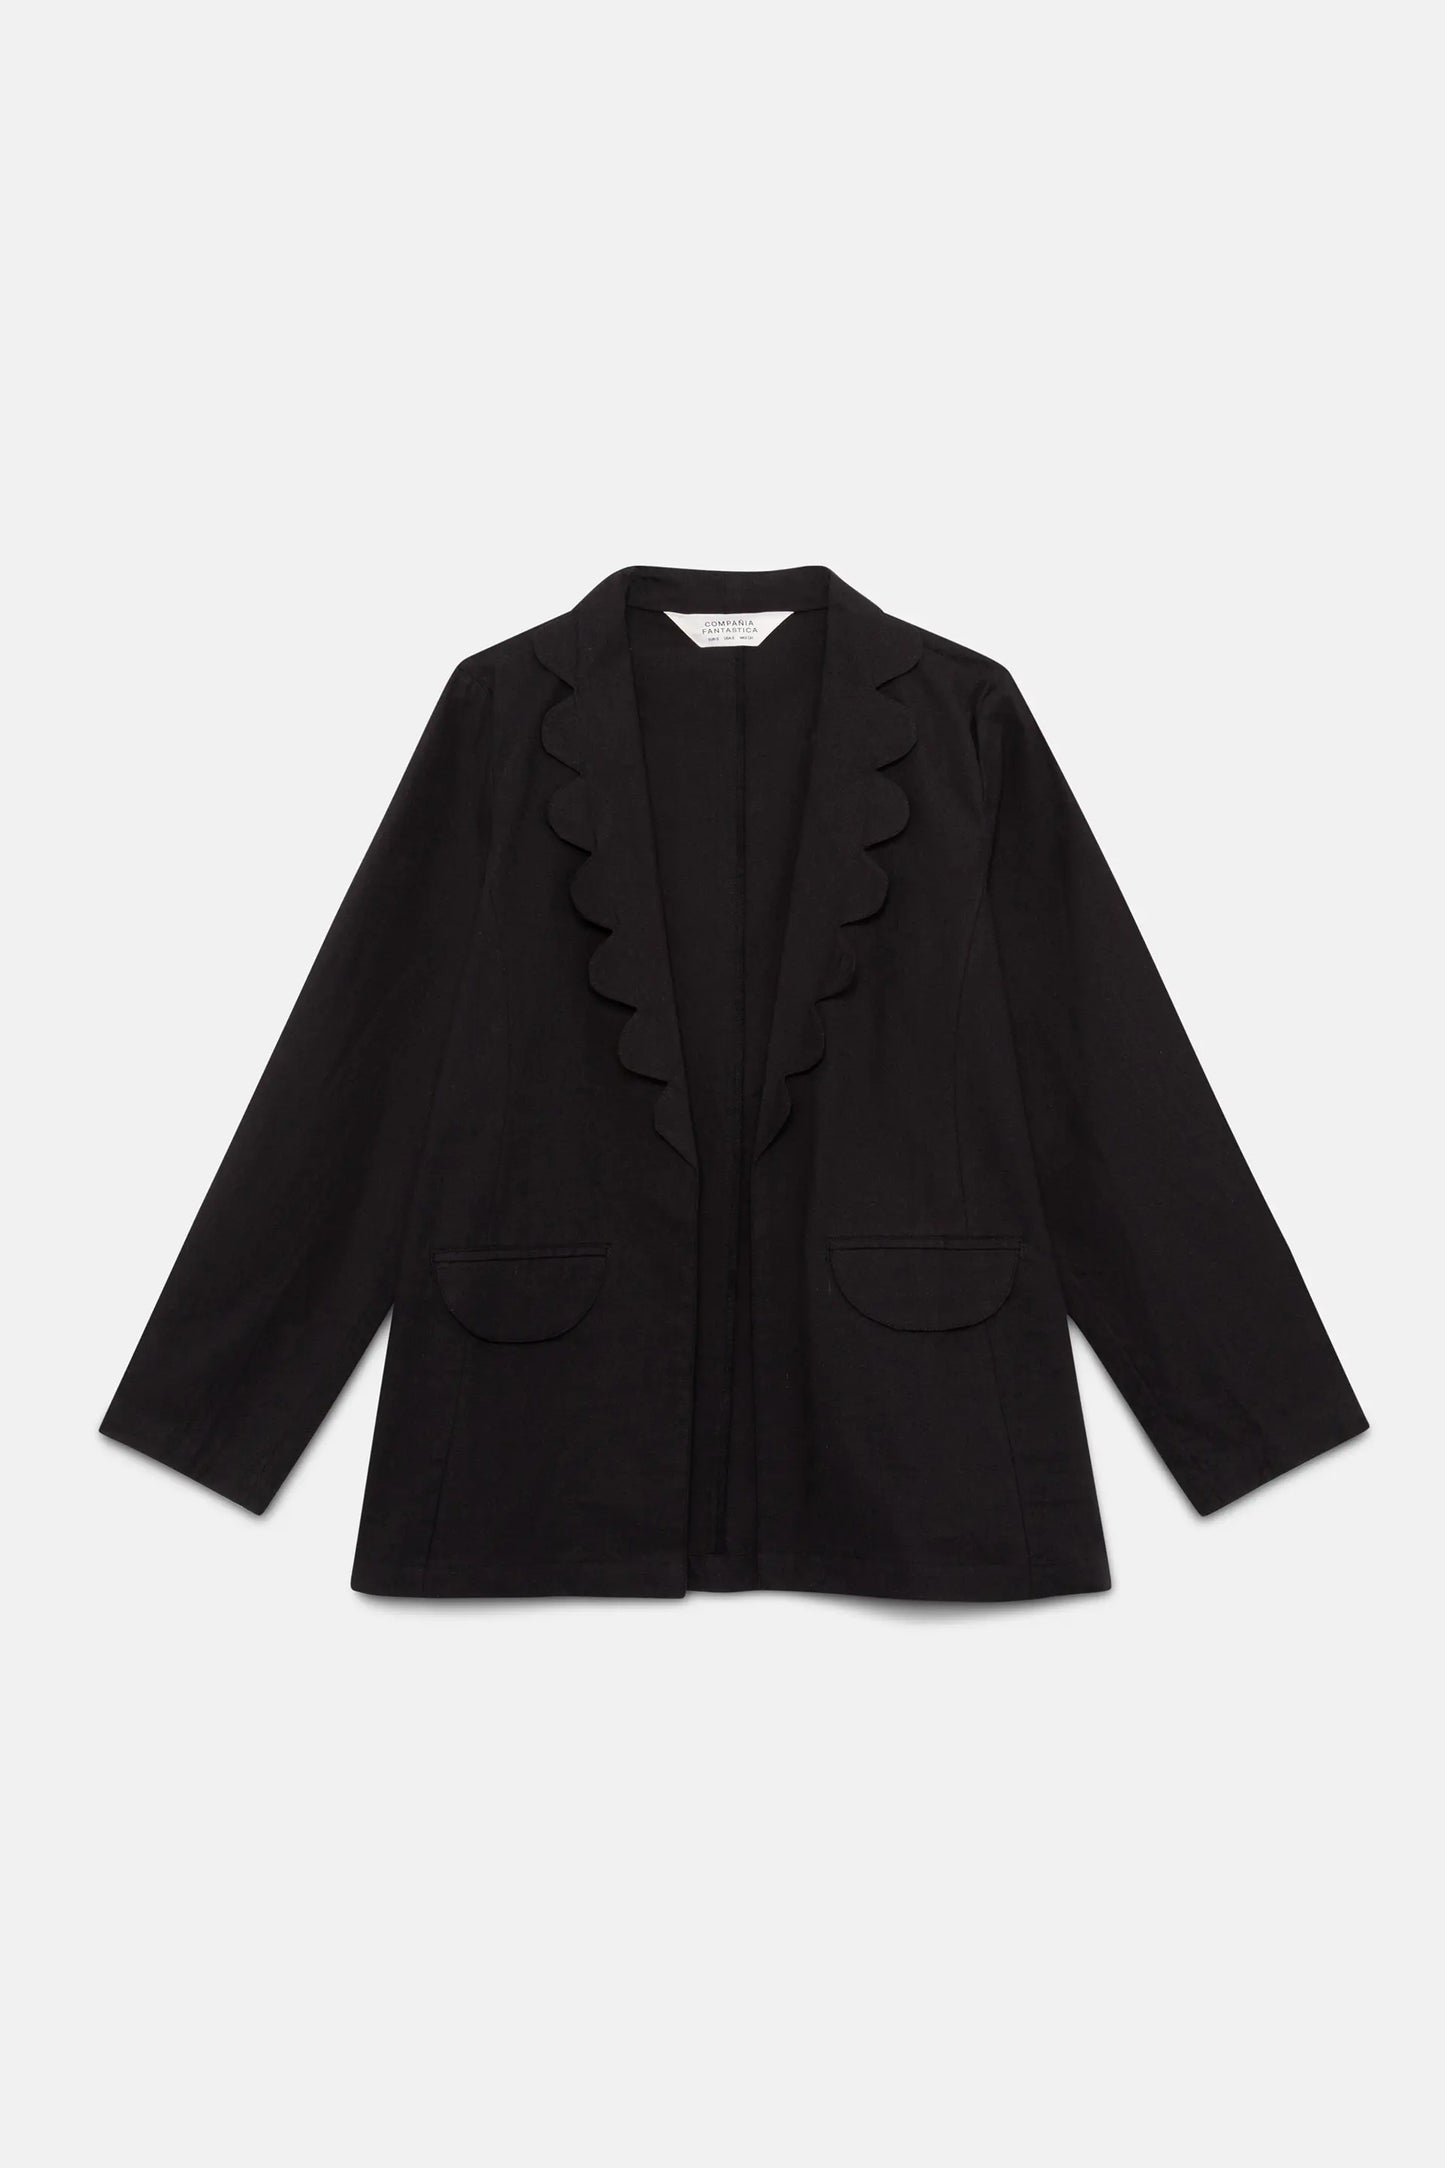 Black suit blazer